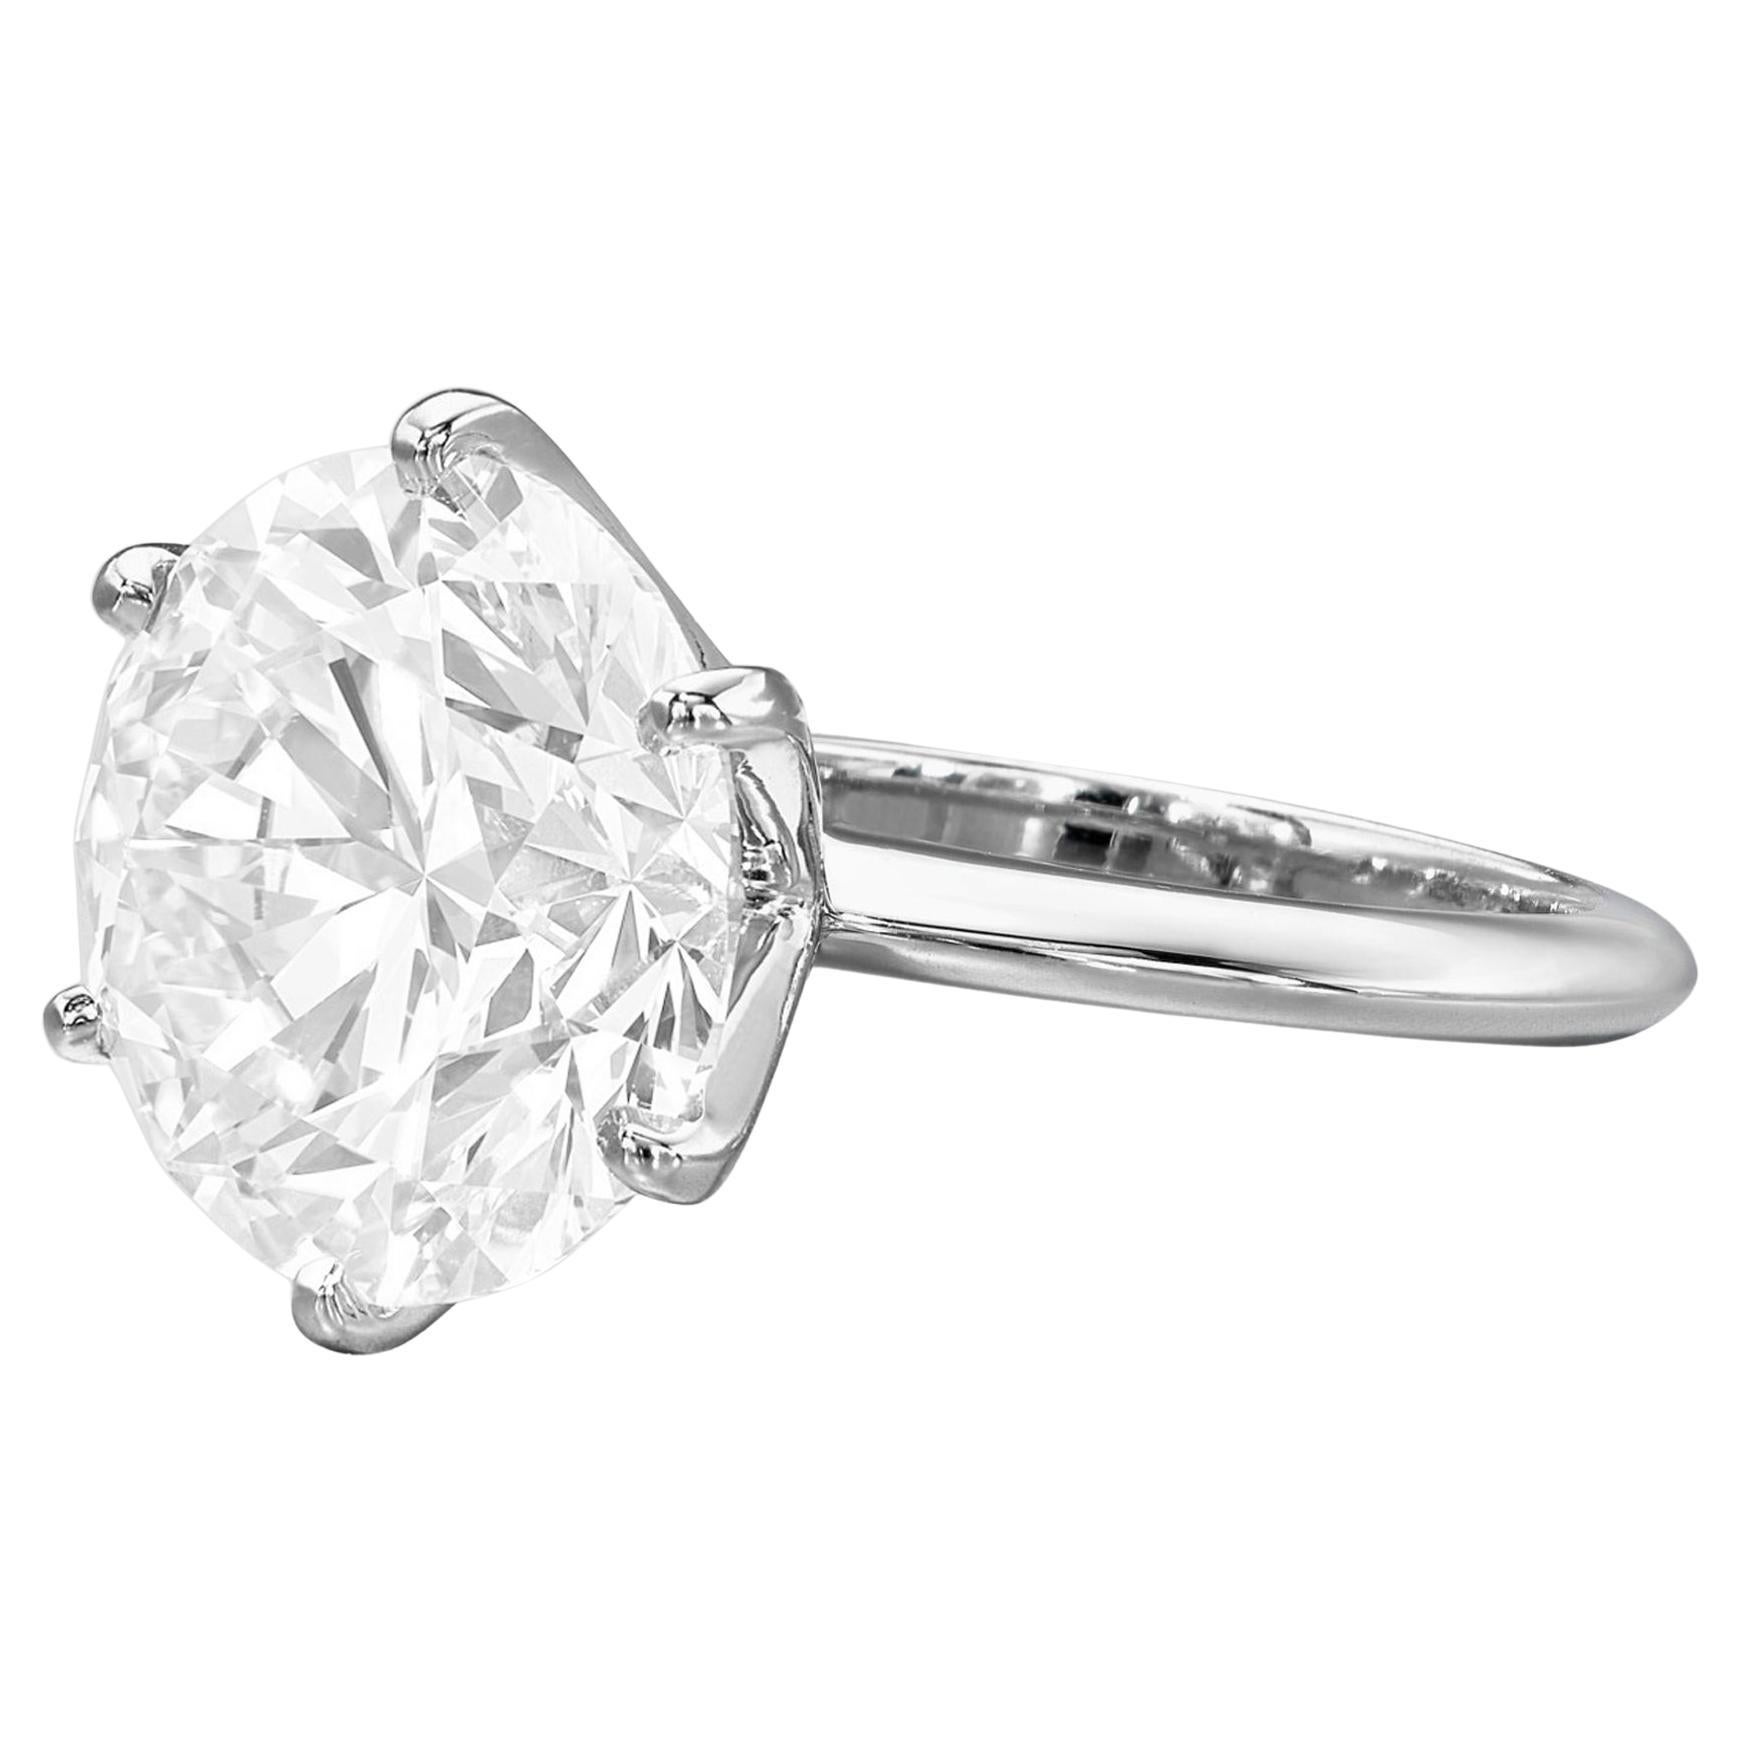 3.5 carat diamond ring